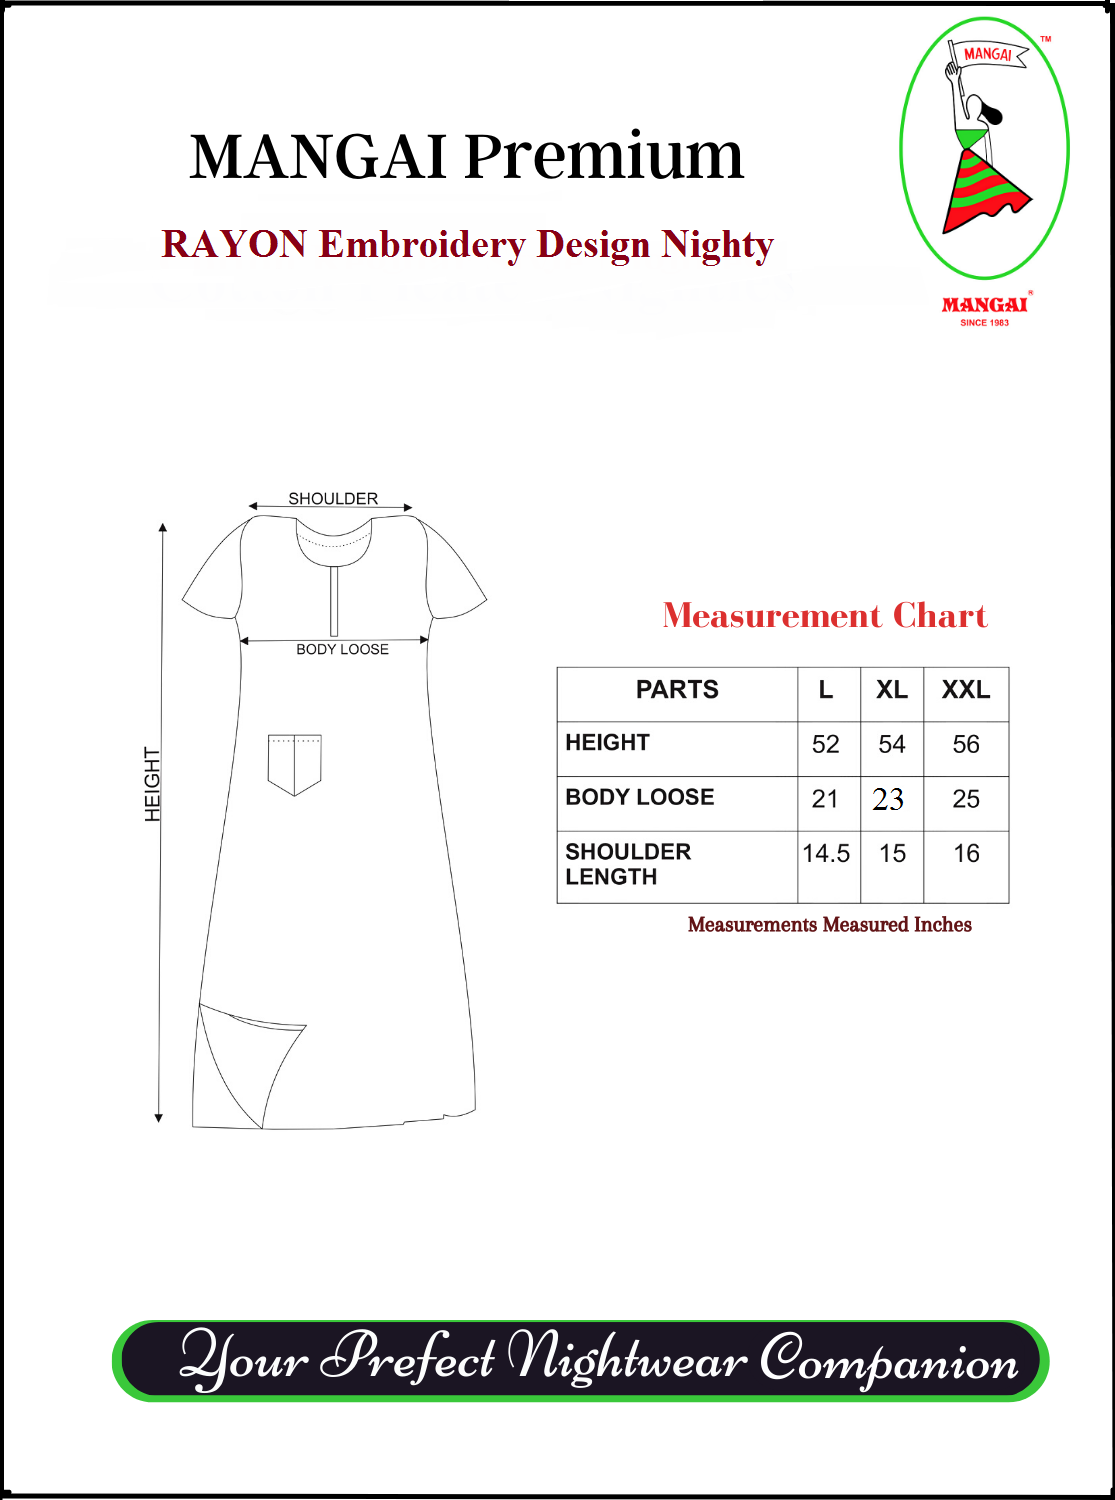 New Arrival MANGAI Premium Rayon Nighty - Stylish Fancy Sleeve Nightwear for Stylish Women | Shrinkage Free Cotton Nighties | Beautiful Embroidery Nighty